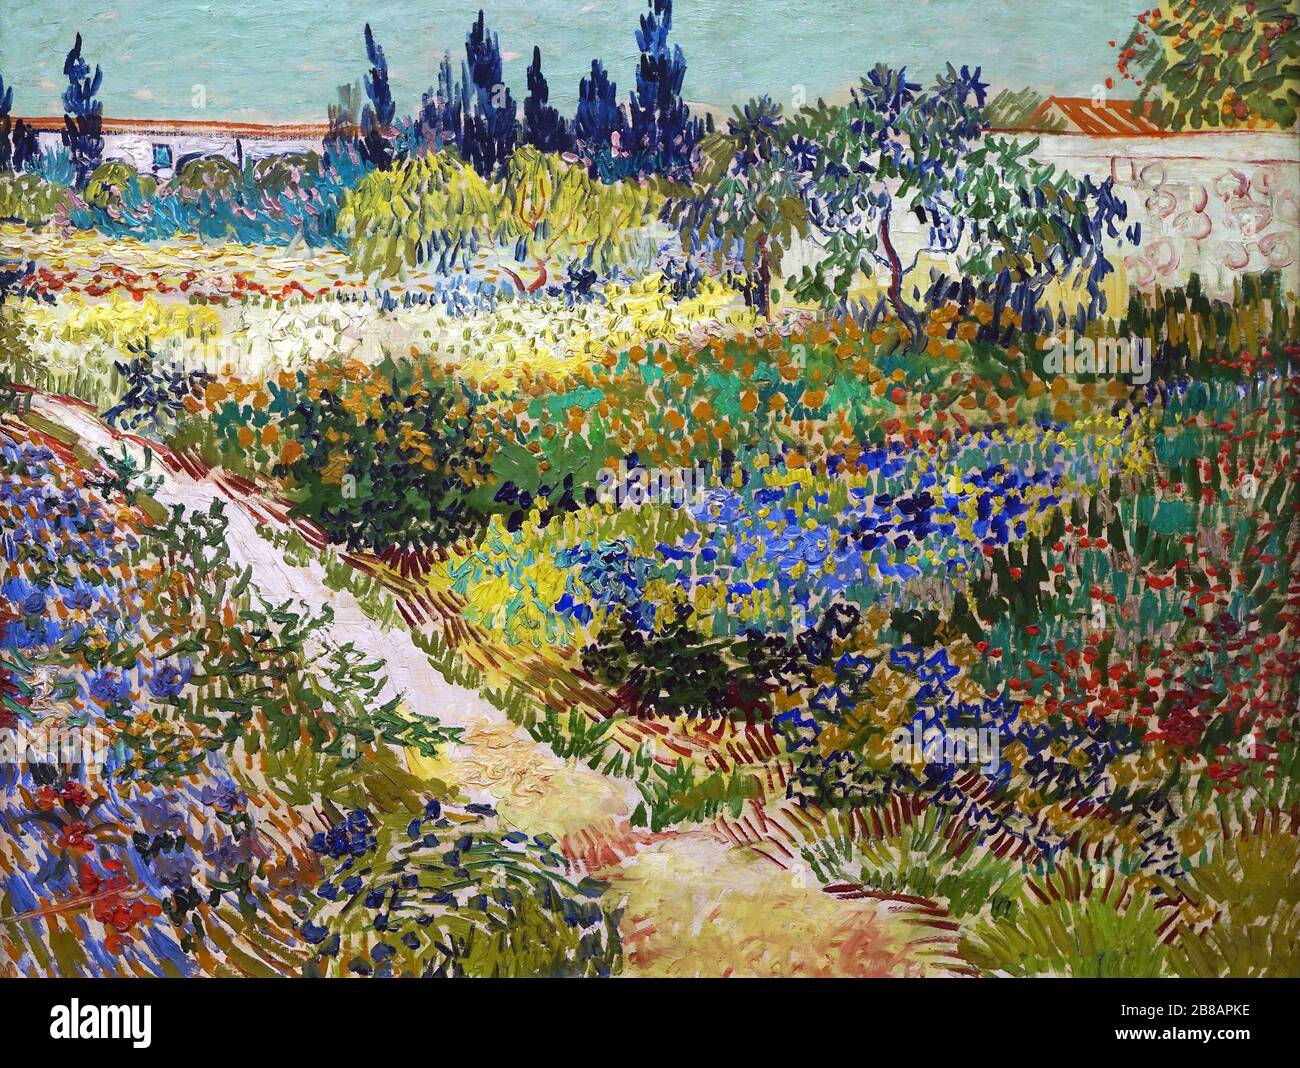 Garden at arles,1888 by Vincent van Gogh 1853-1890, Stock Photo